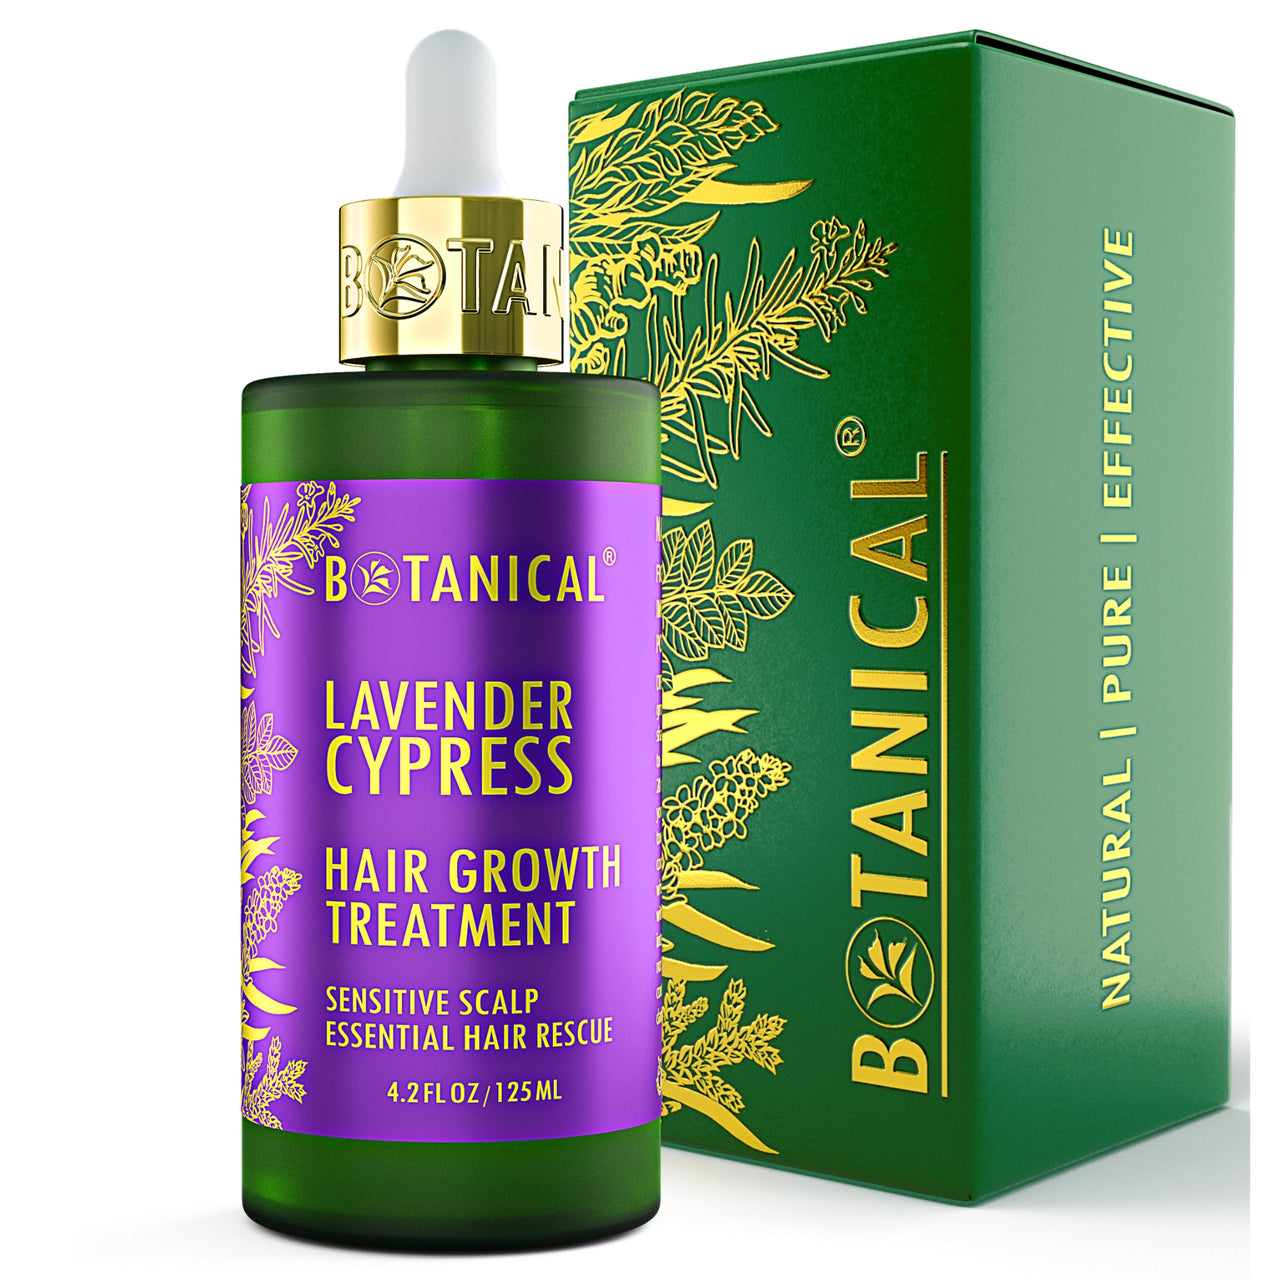 Lavender & Cypress Hair Growth Treatment - Sensitive Scalp - 4.2 Fl Oz